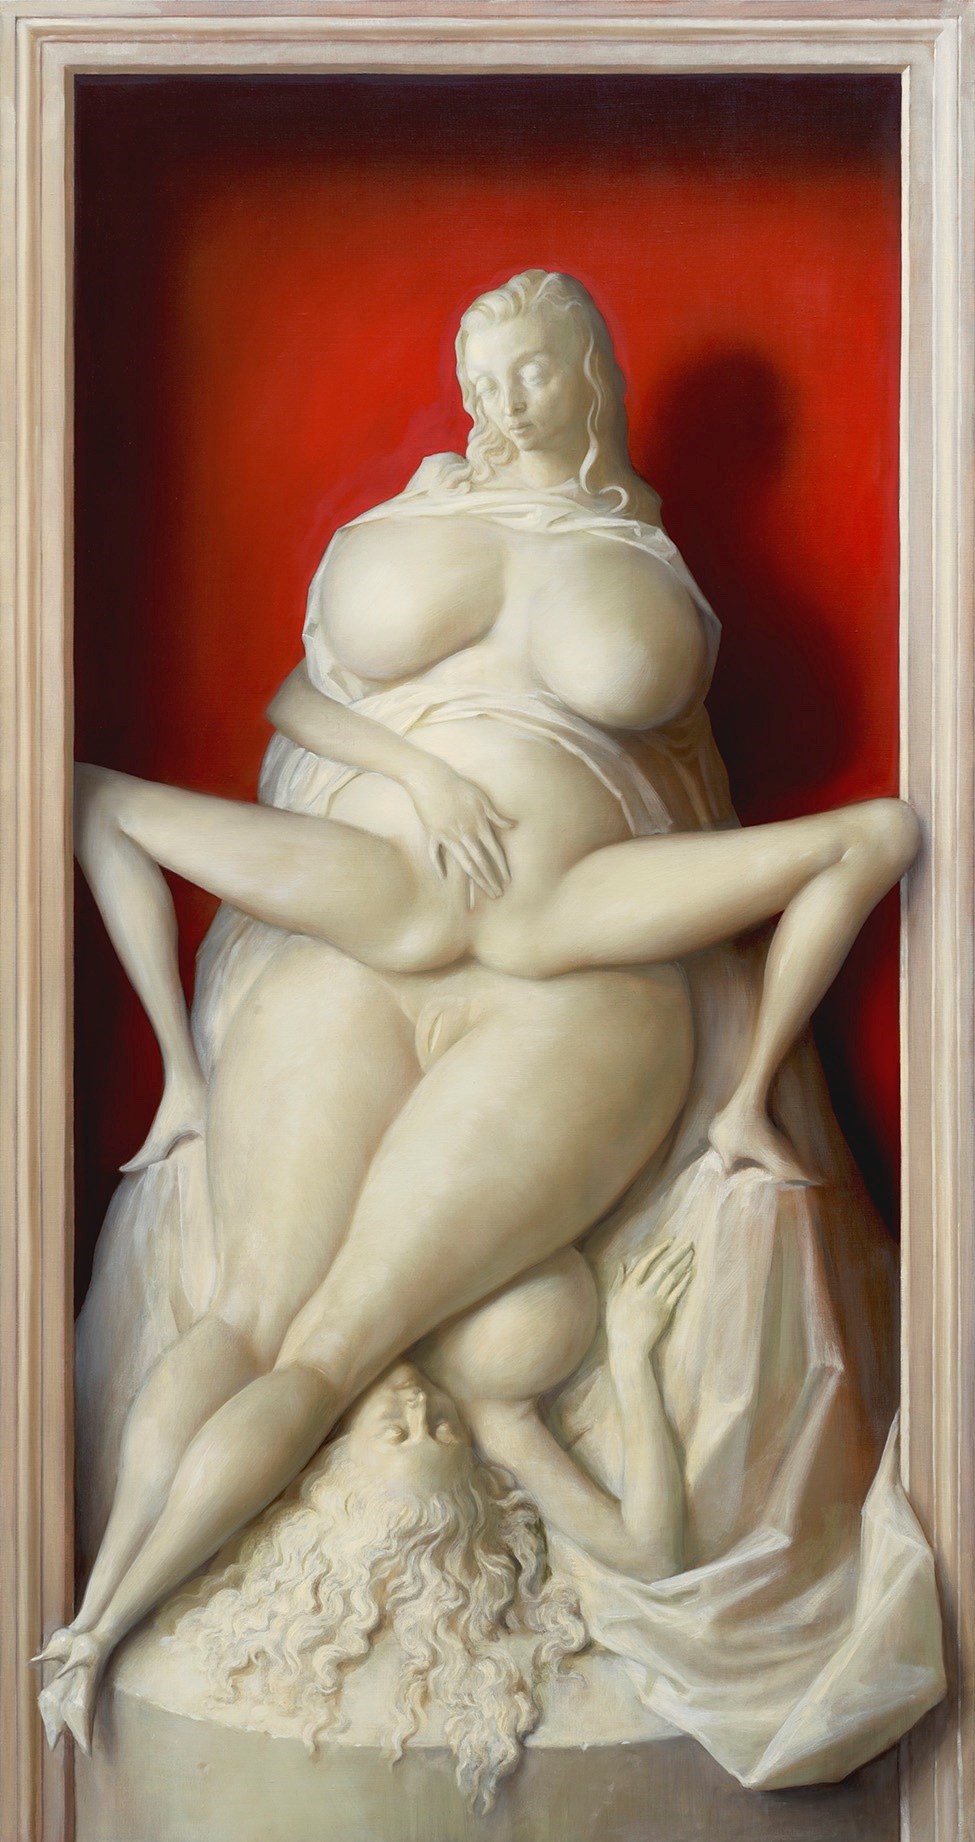 Art Potn - John Currin captures the desolate mood of porn as classical art | Dazed